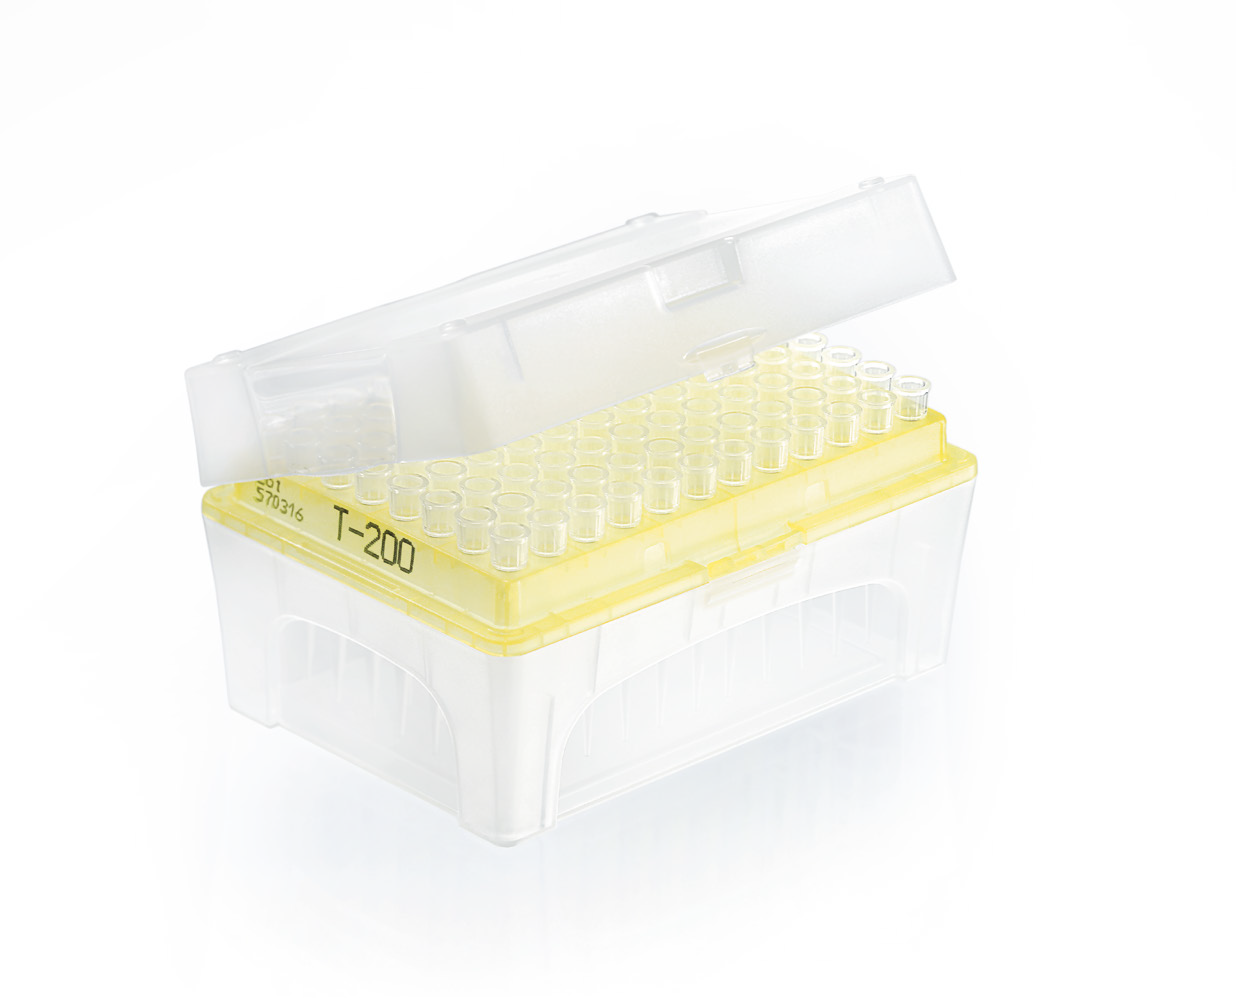 Filter tips rack DNA-/RNase-free IVD TipBox 5 - 100 μl, PCK=480